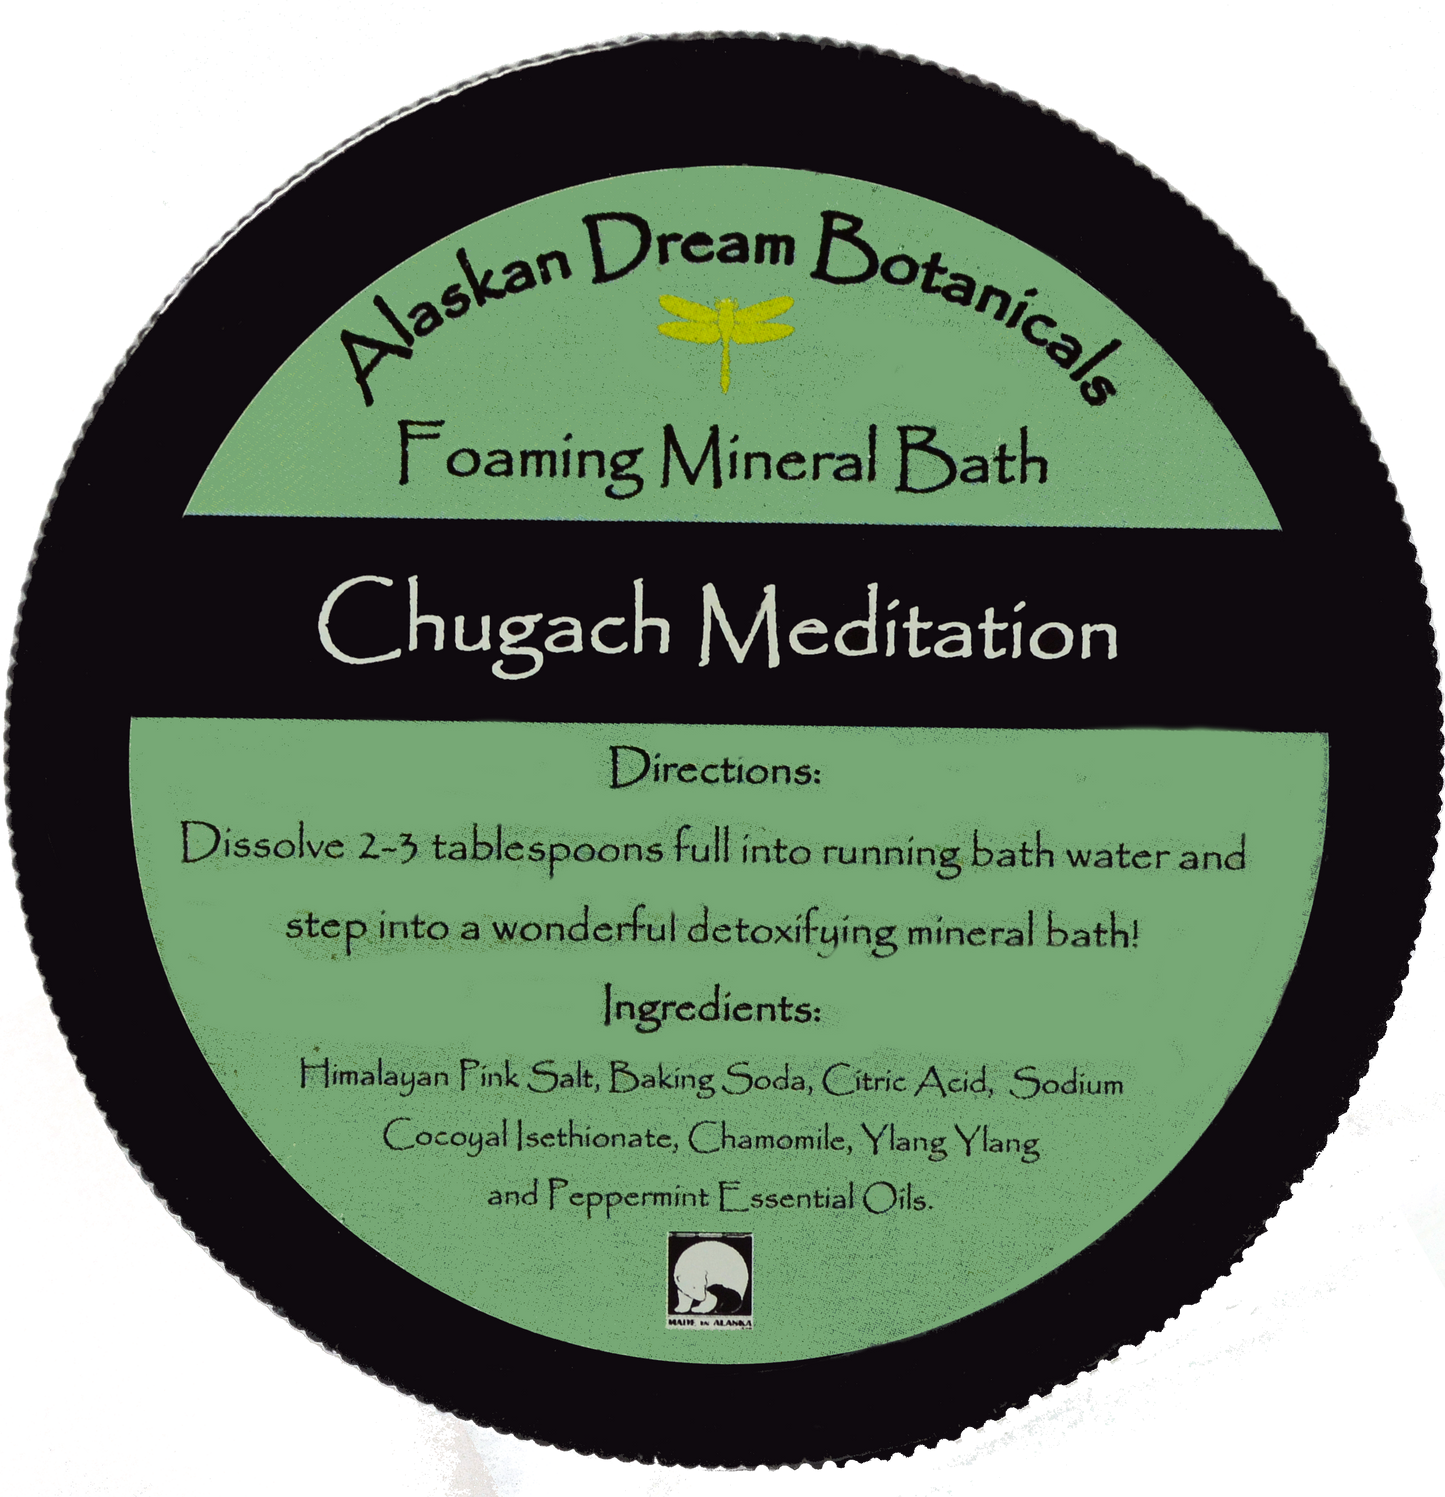 Chugach Meditation Spa Grade Foaming Mineral Bath - Alaskan Dream Botanicals